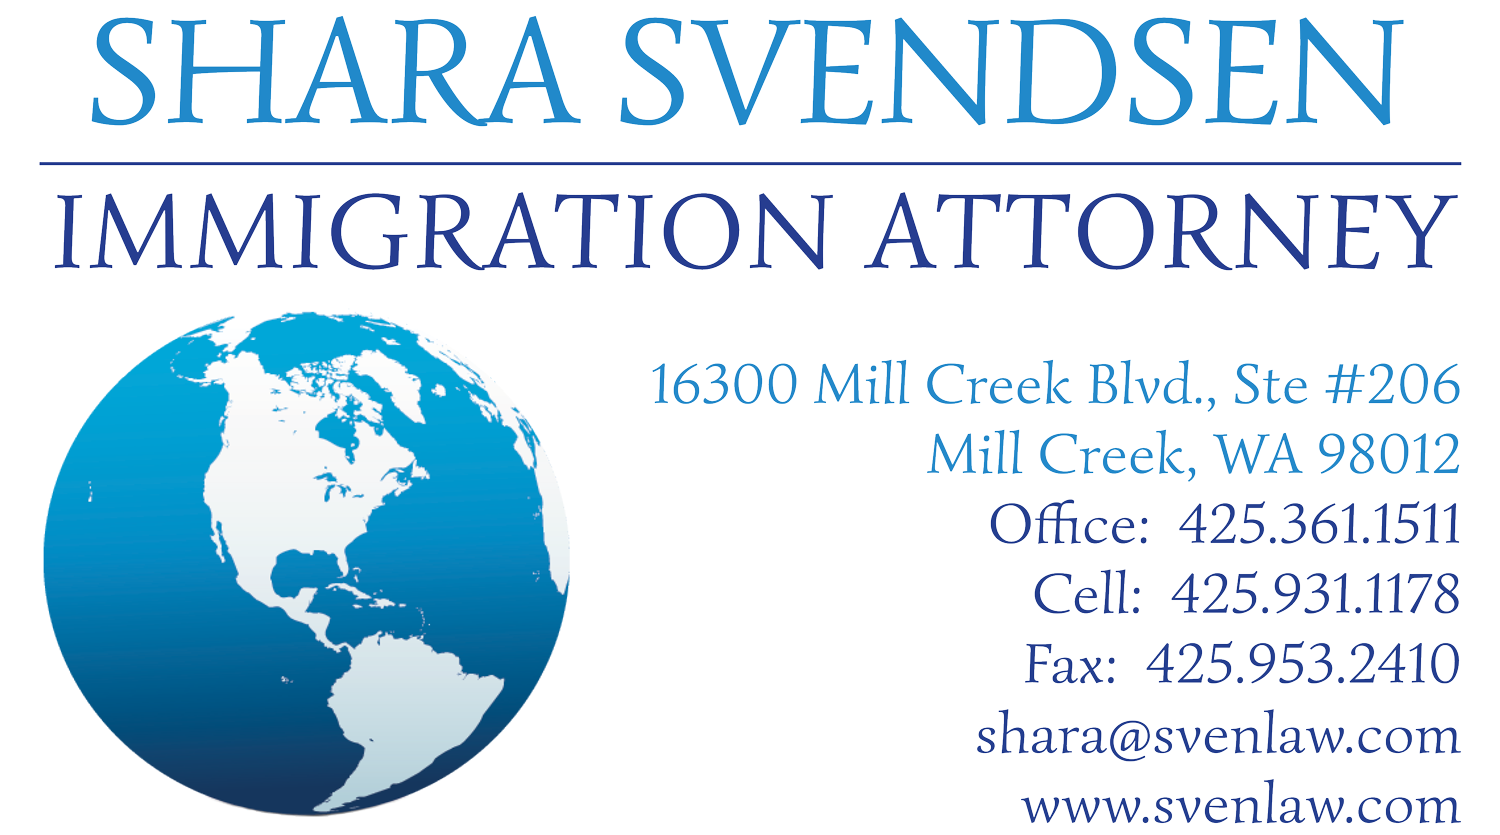 Law Office of Shara Svendsen business card back